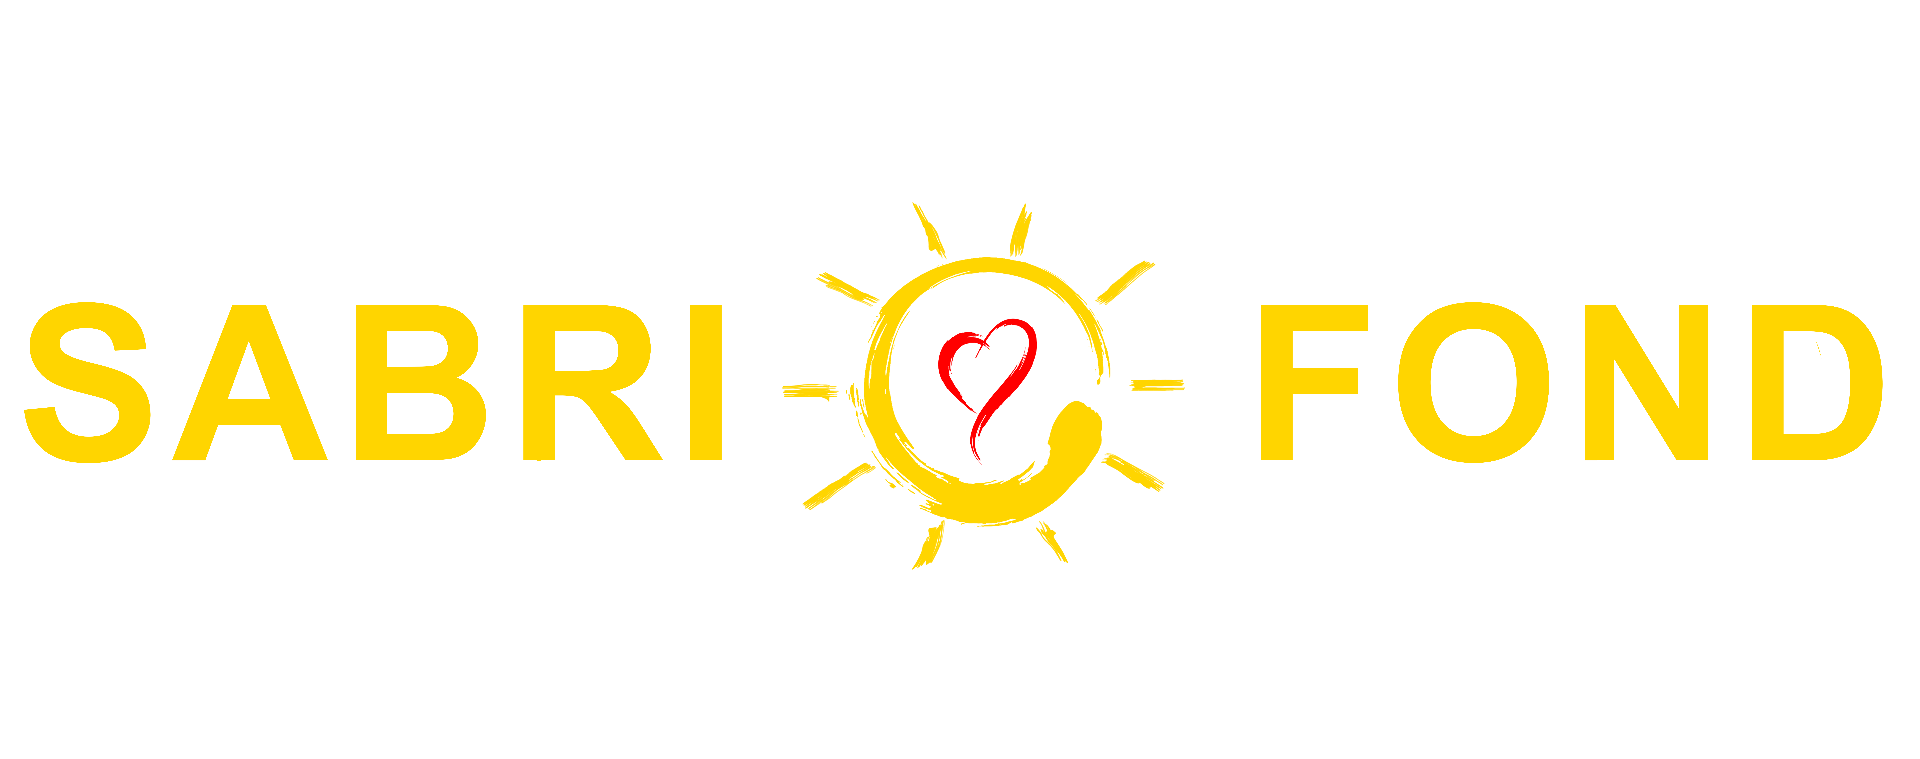 Логотип фонда: БФ 